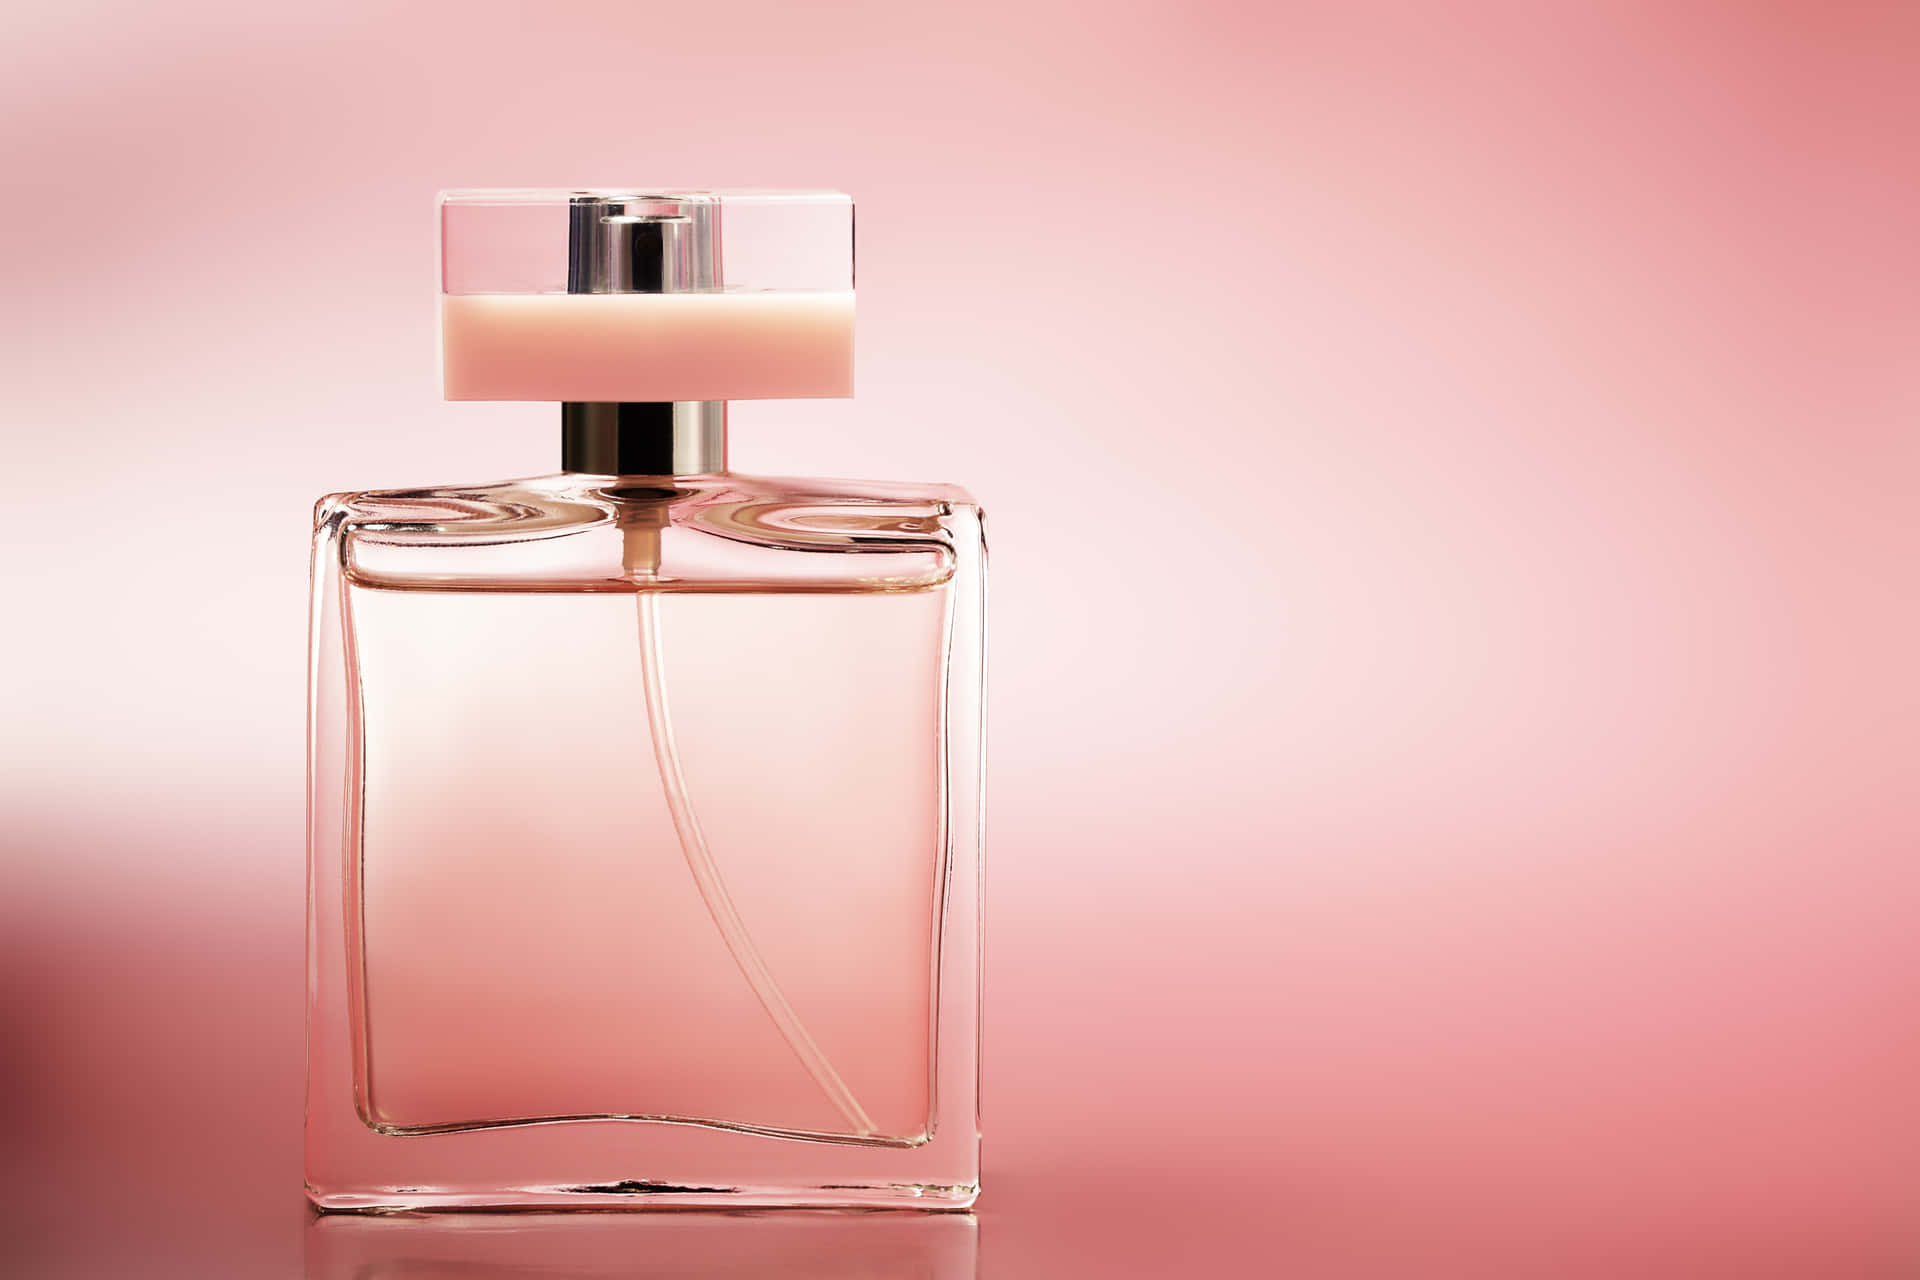 Elegance Awaits You With a Splash of Perfume